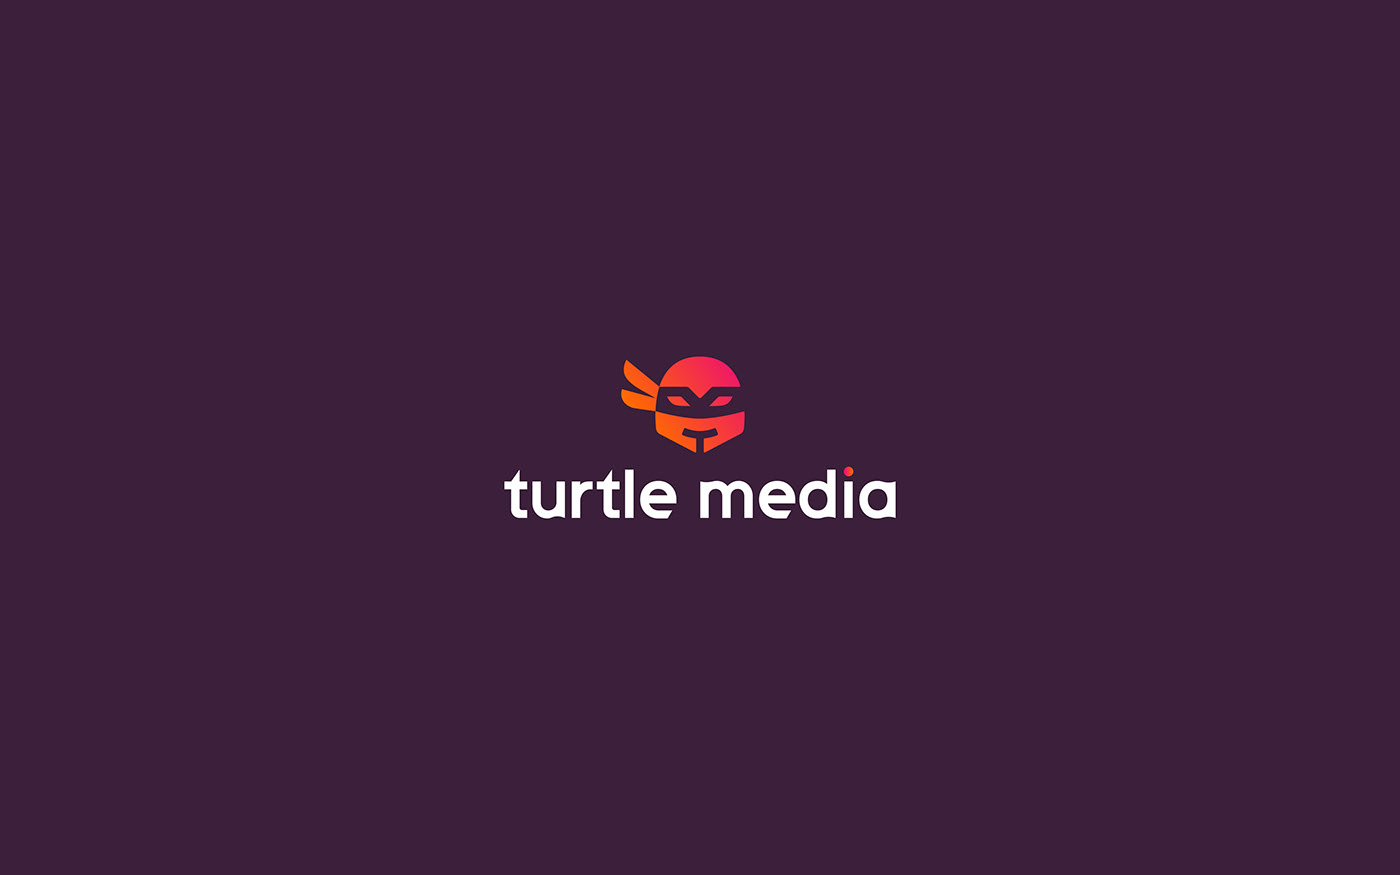 agency brand consulting brand identity branding  digital marketing agency marketing agency media Ninja Turtles social media marketing tutrle